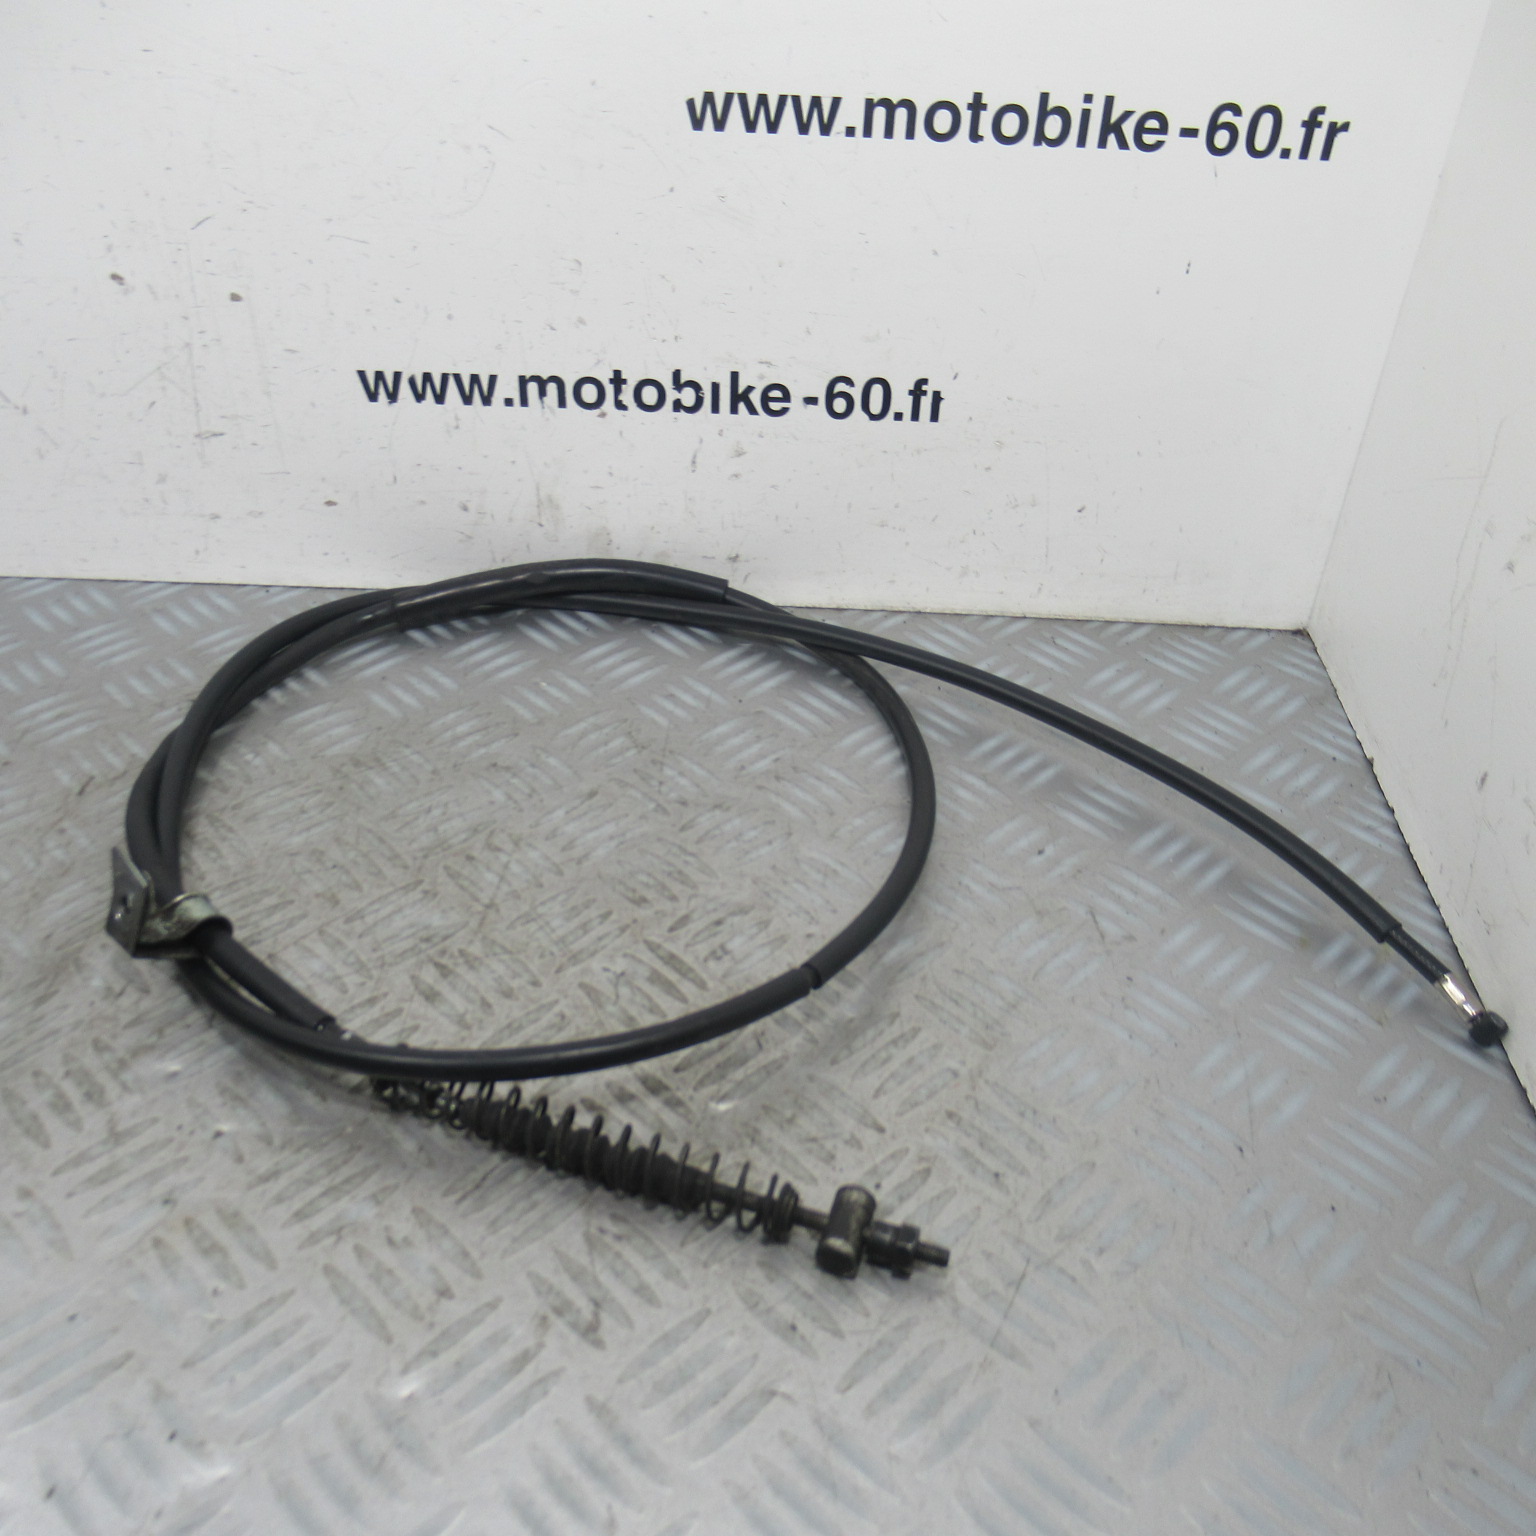 Cable frein arriere MBK Flipper 115 4t